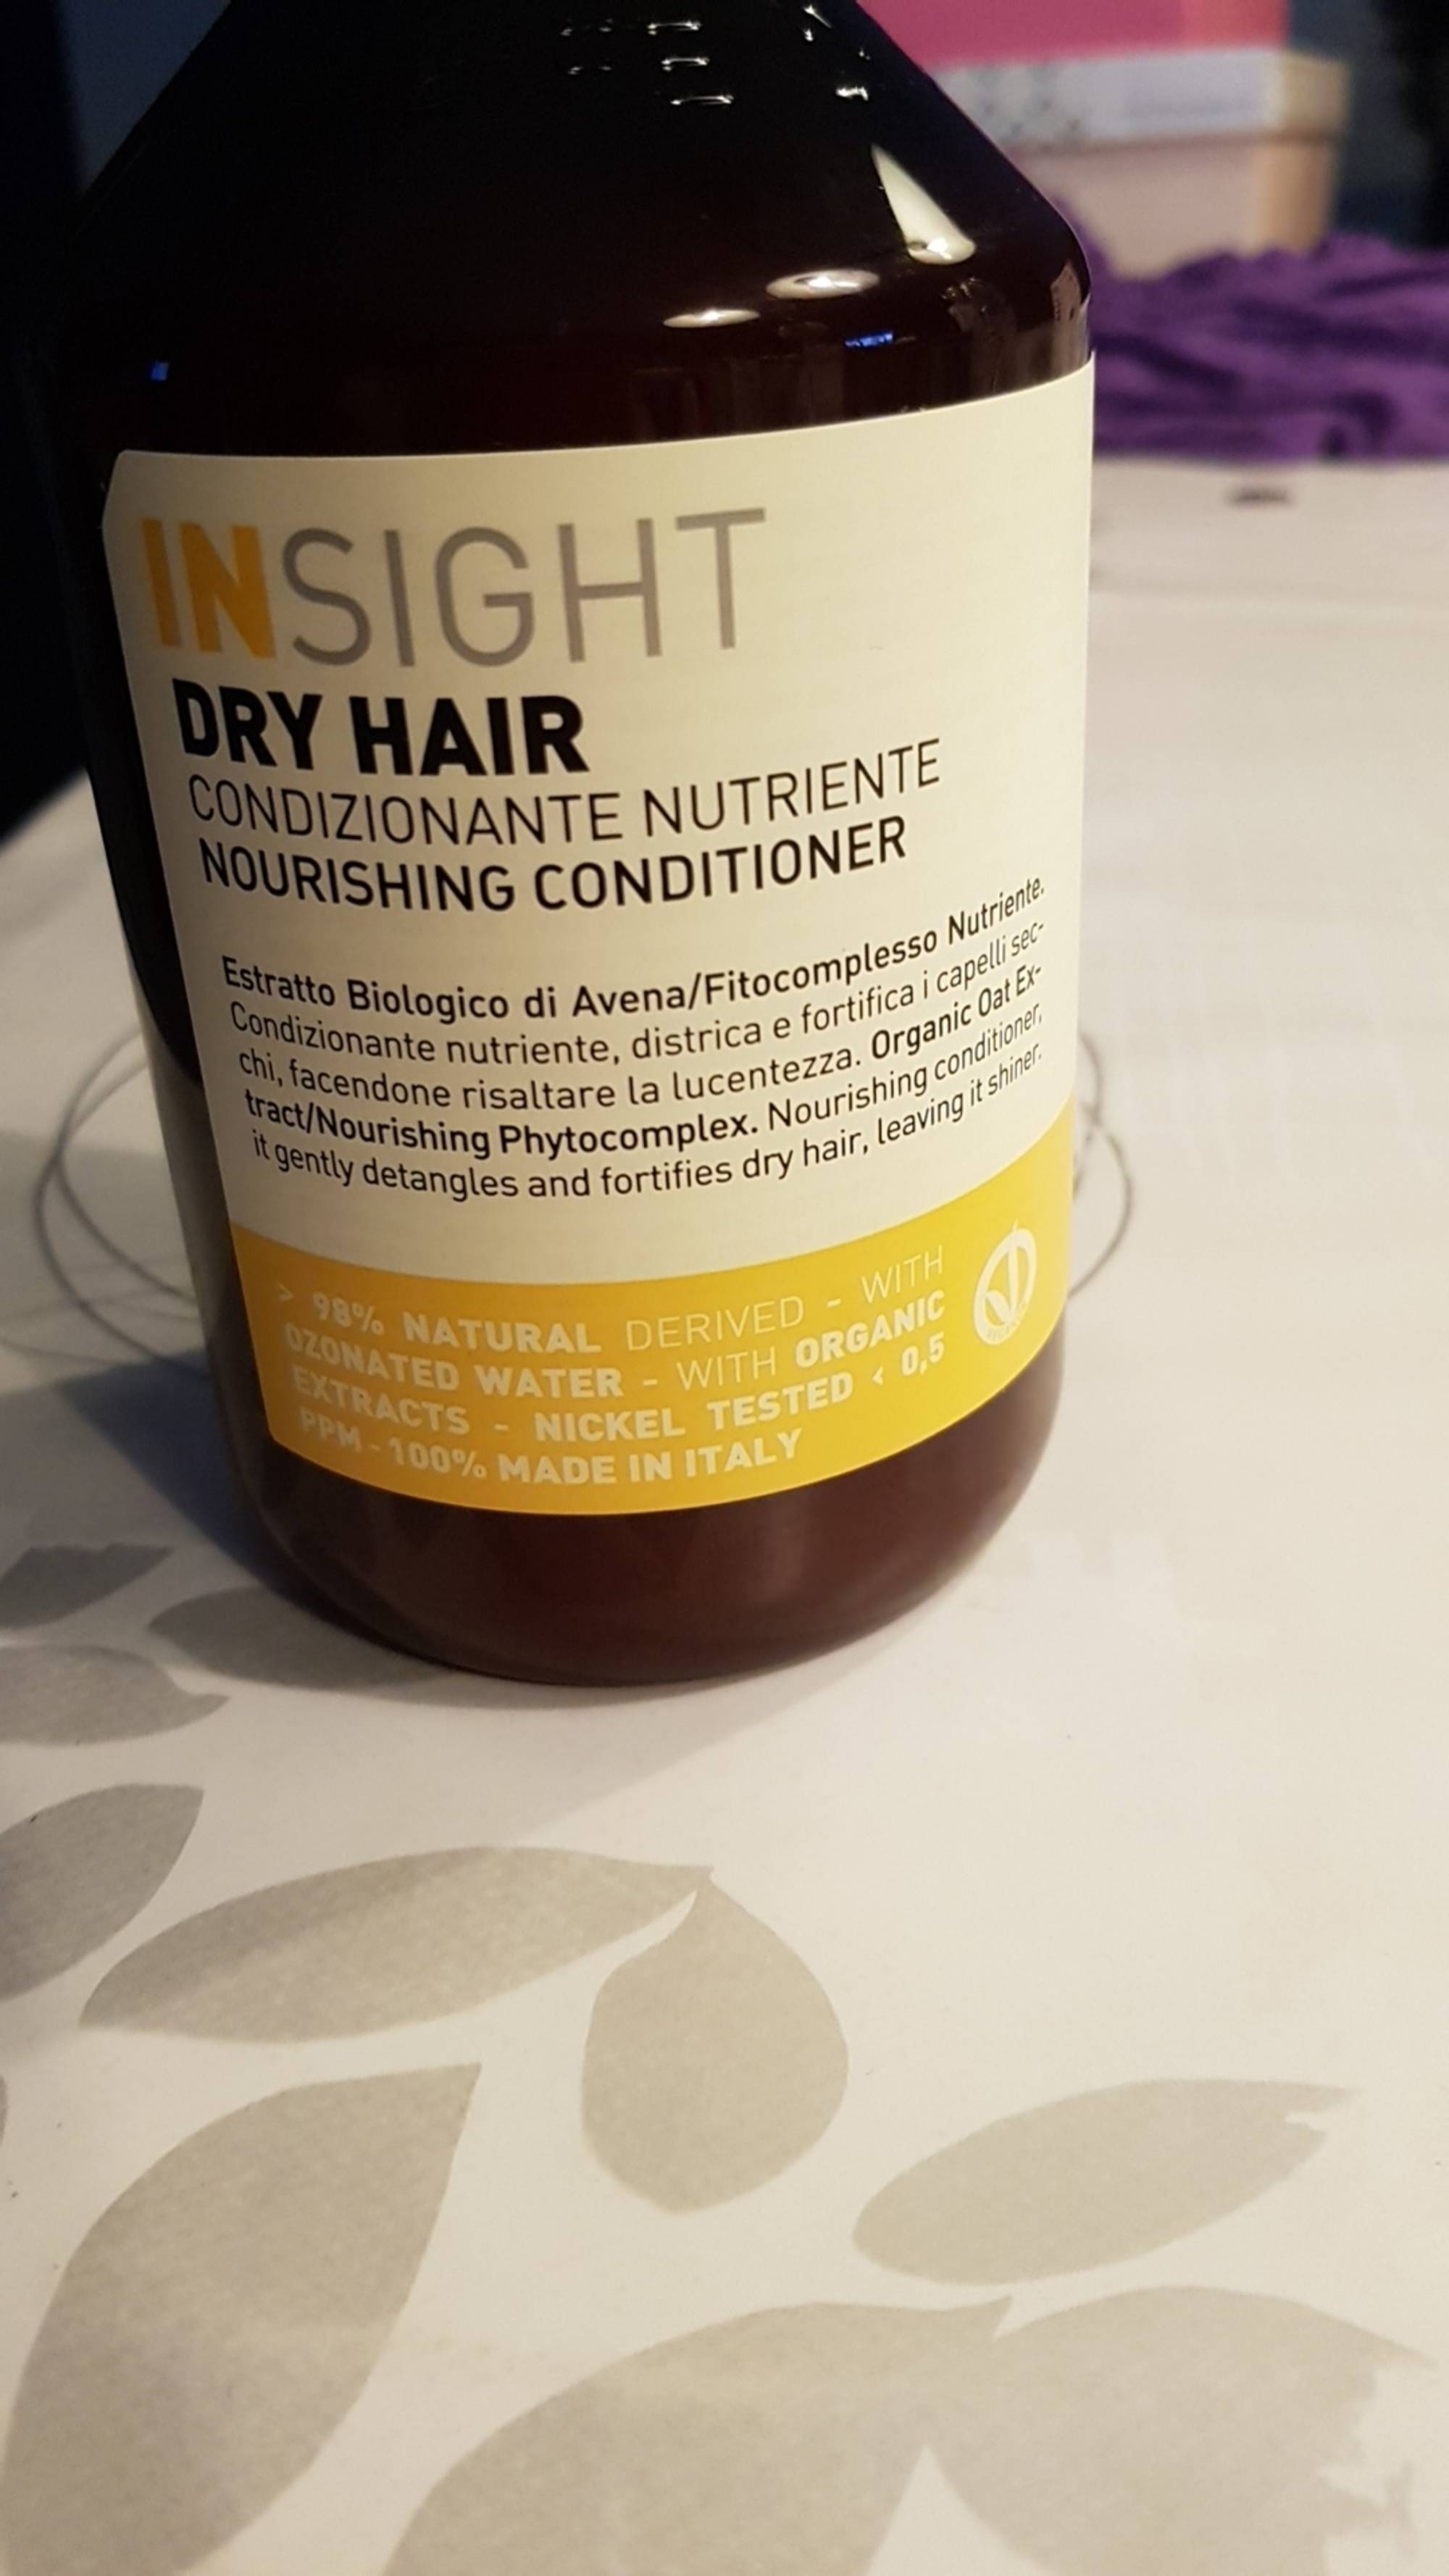 INSIGHT - Dry hair - Nourishing conditioner